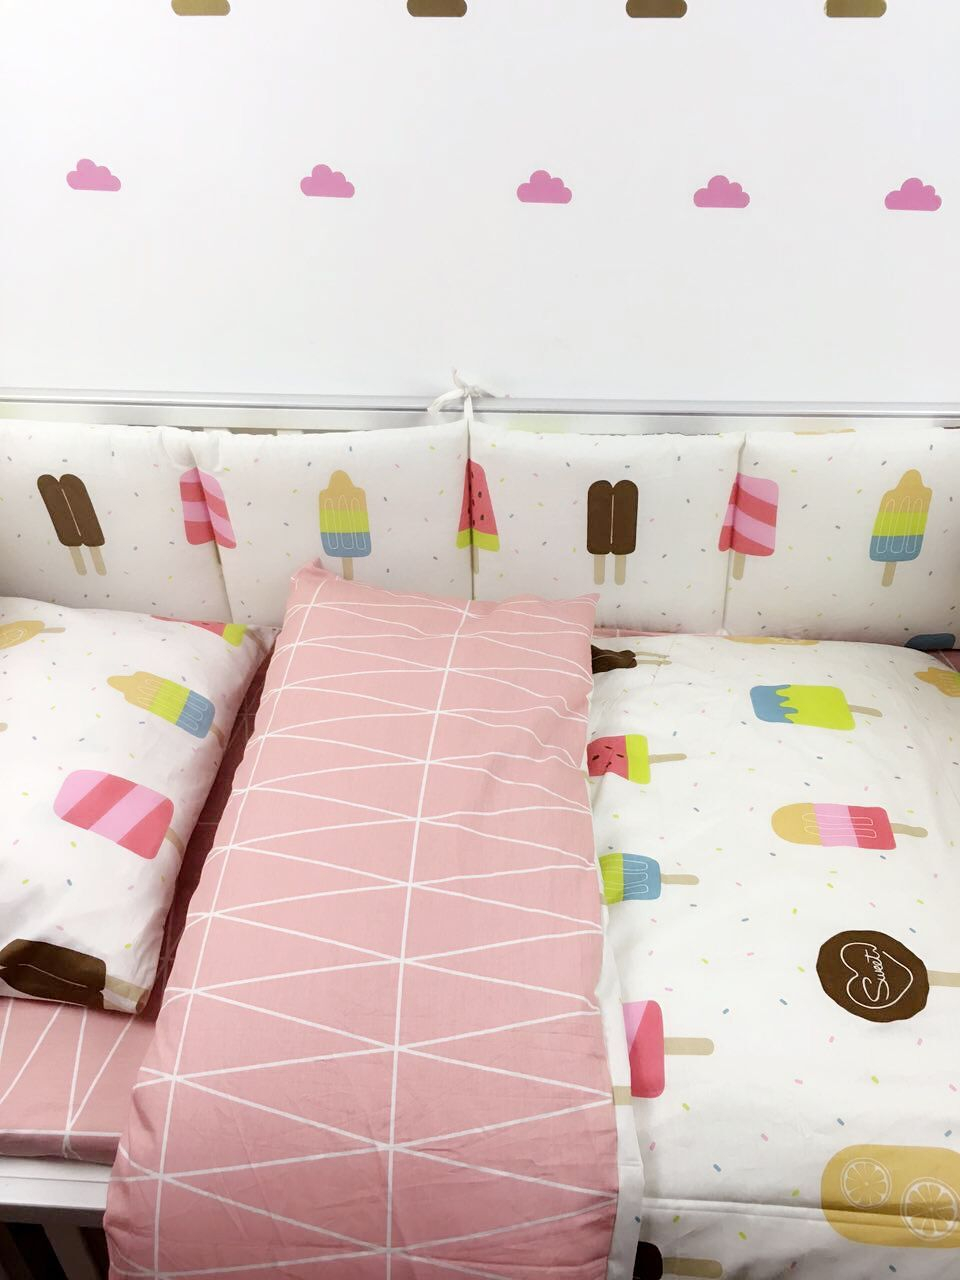 Us 351 10 Off7pc Crib Infant Room Kids Ba Bedroom Set Nursery Bedding Black Bear Pink Ice Cream Cot Bedding Set For Newborn Ba Girls In with dimensions 960 X 1280